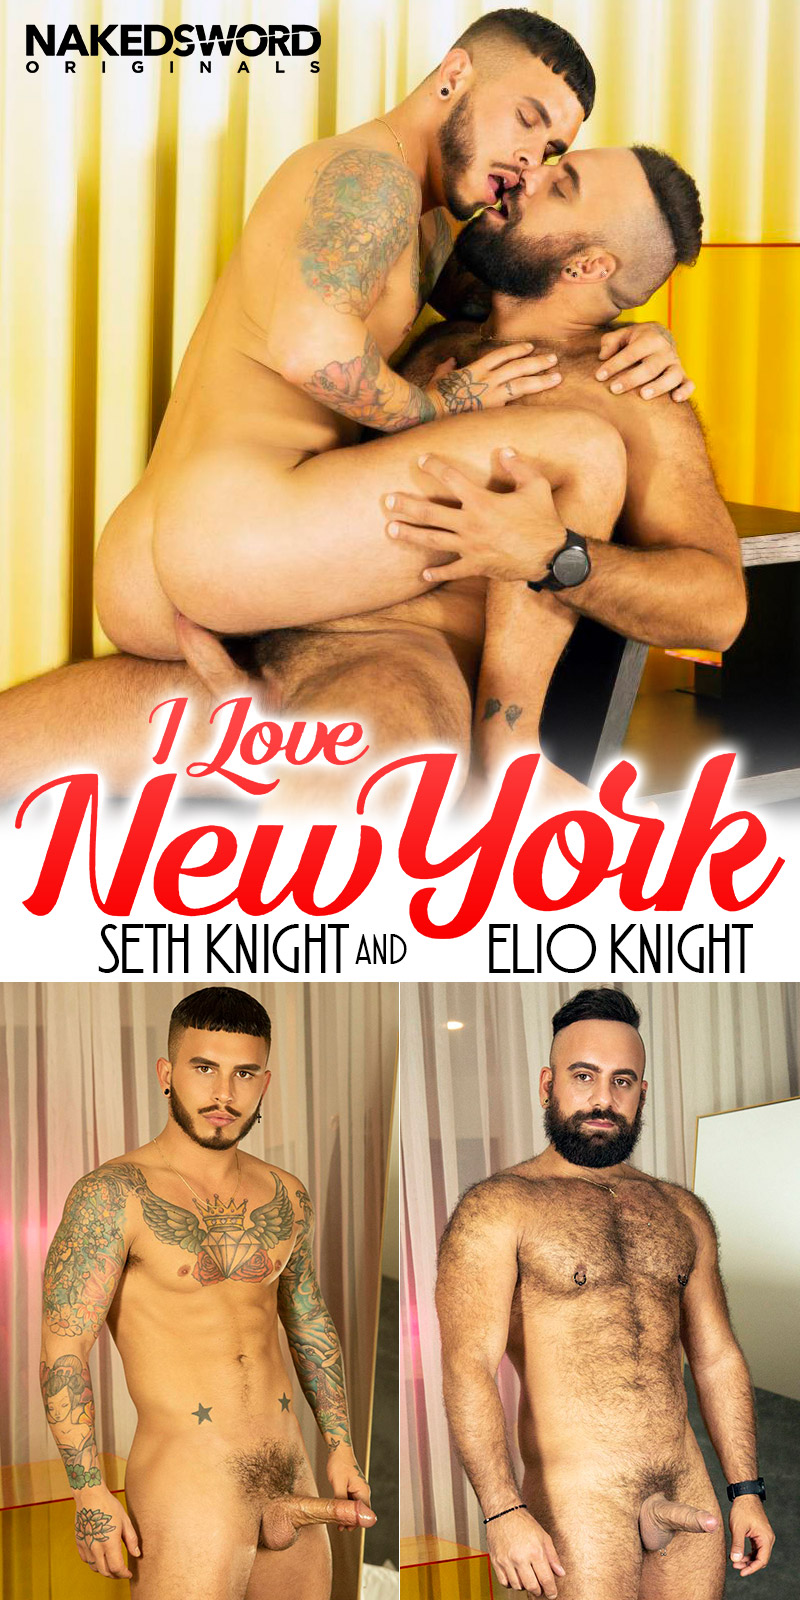 NakedSword Originals: Seth Knight rides Elio Knight bareback in "I Love New York"